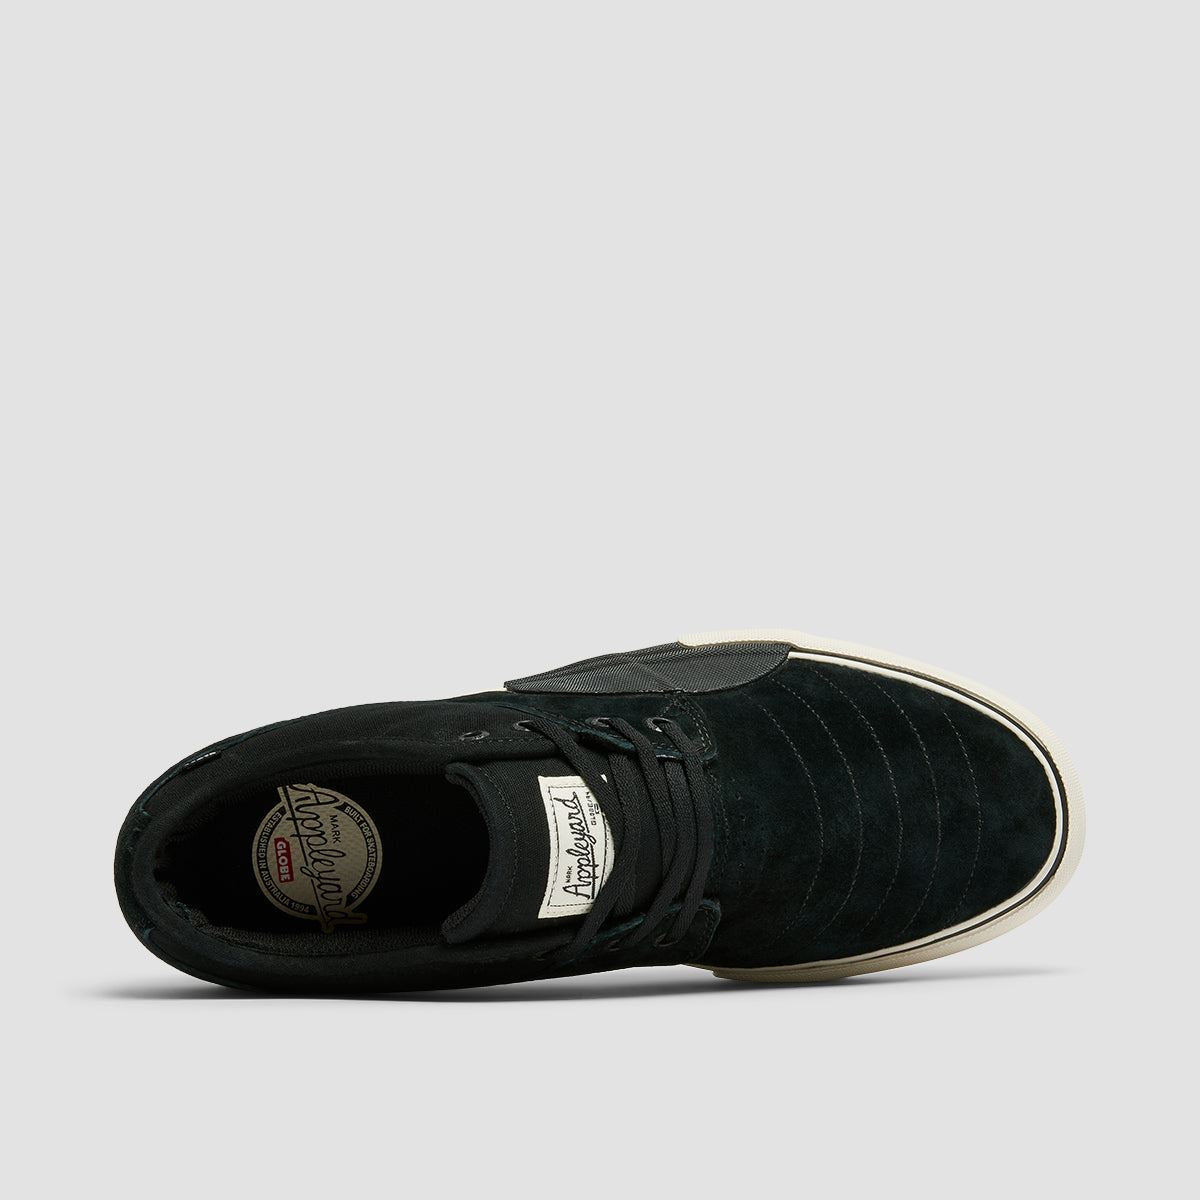 Globe Mahalo Plus Shoes - Black/Antique